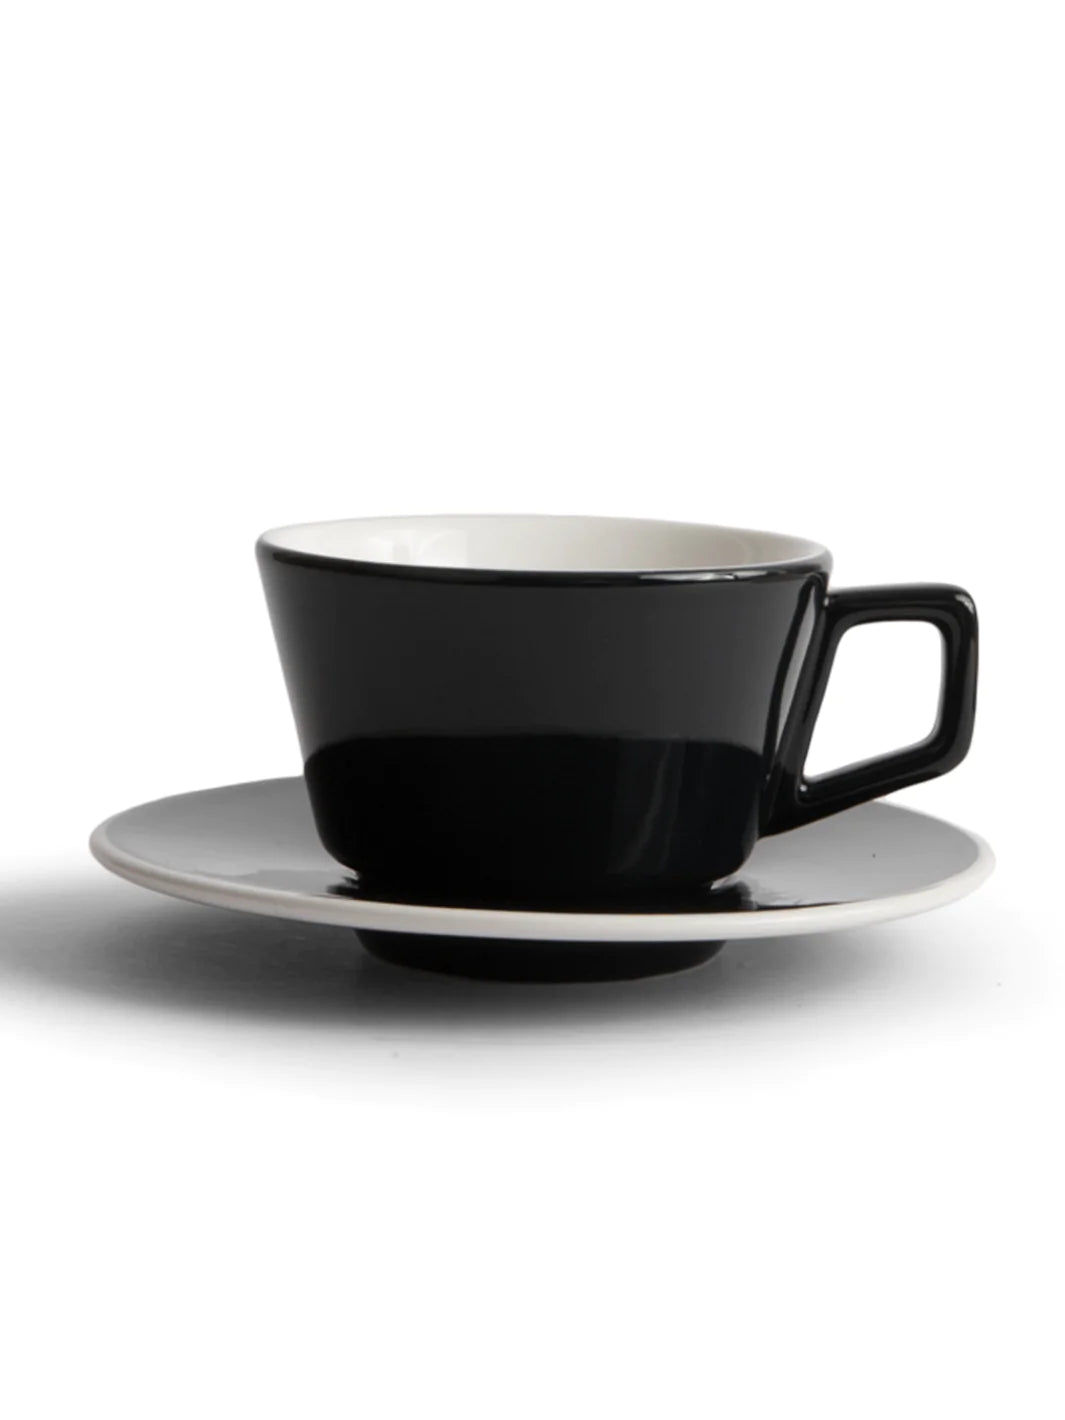 Created Co. Angle Cappuccino Cup (6oz)